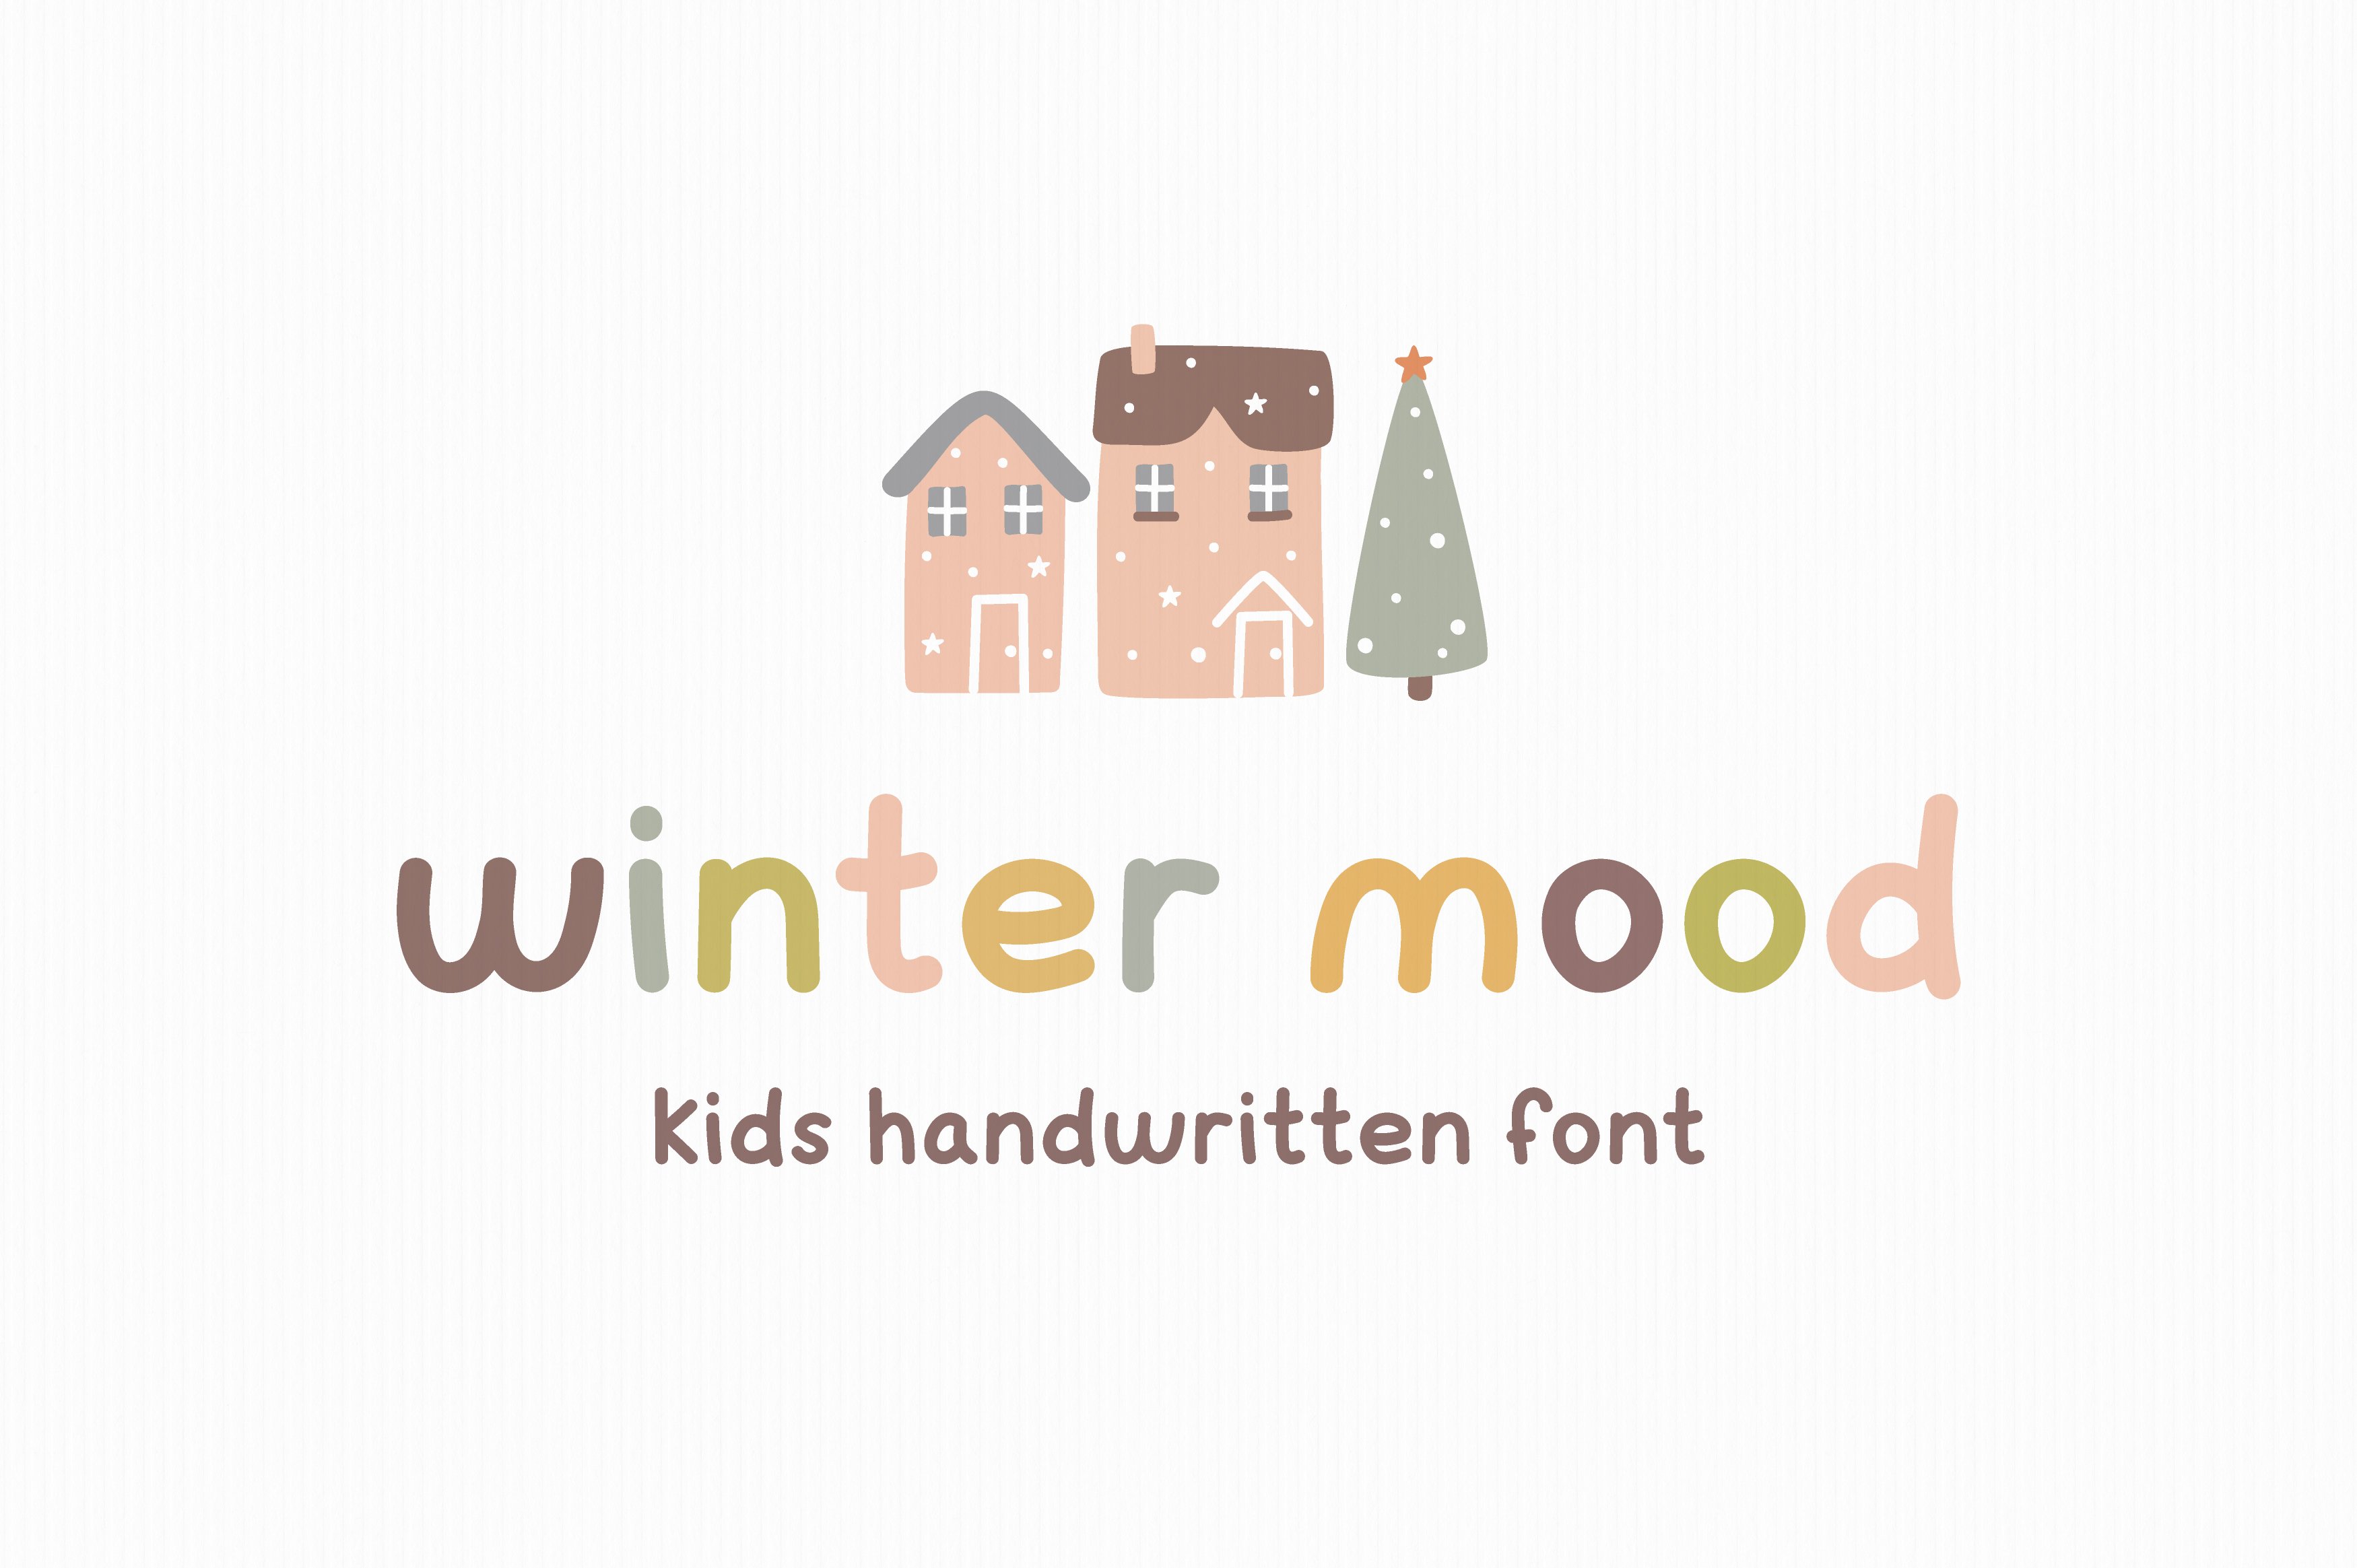 Winter mood | Kids font cover image.